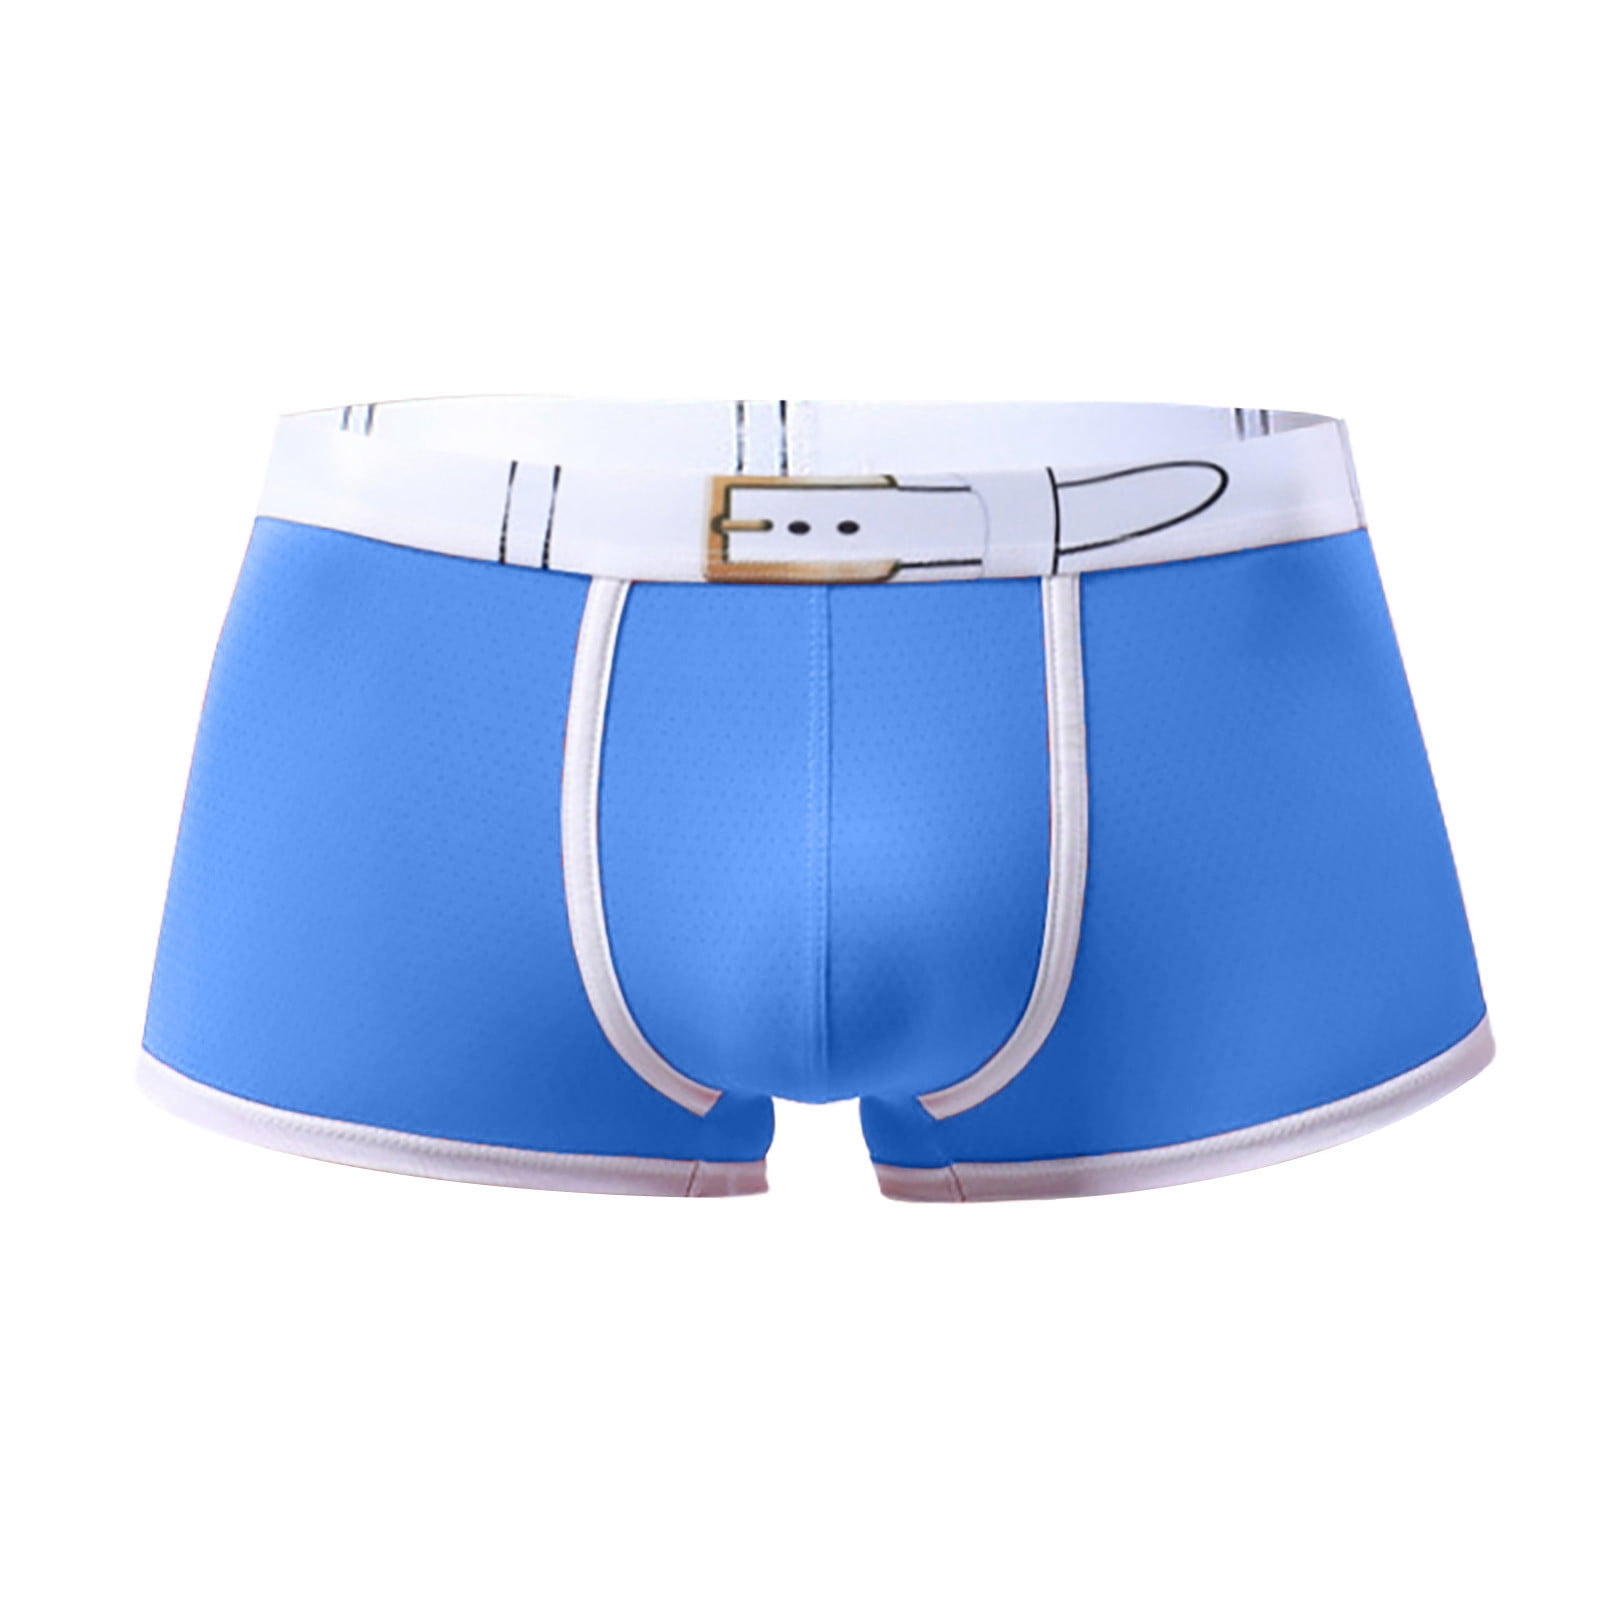 PMUYBHF Male Men's Underwear Sets Big and Tall Male Fashion